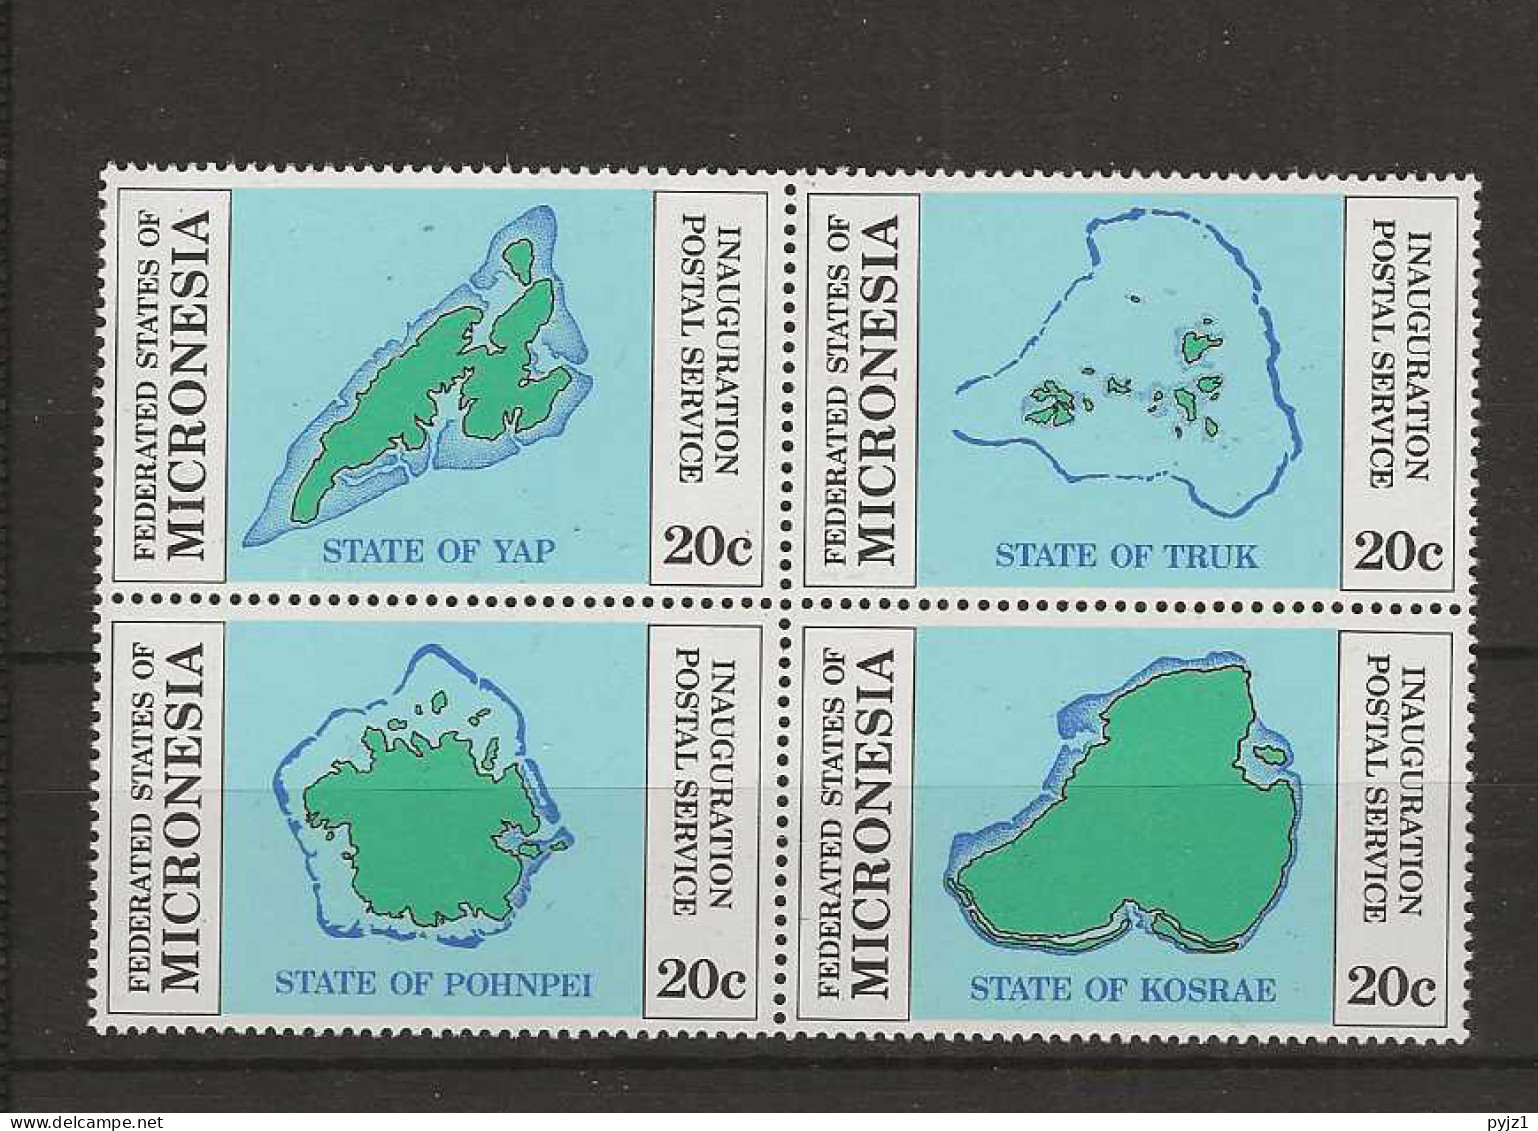 1984 MNH Micronesia Mi 1-4 Postfris** - Micronesia